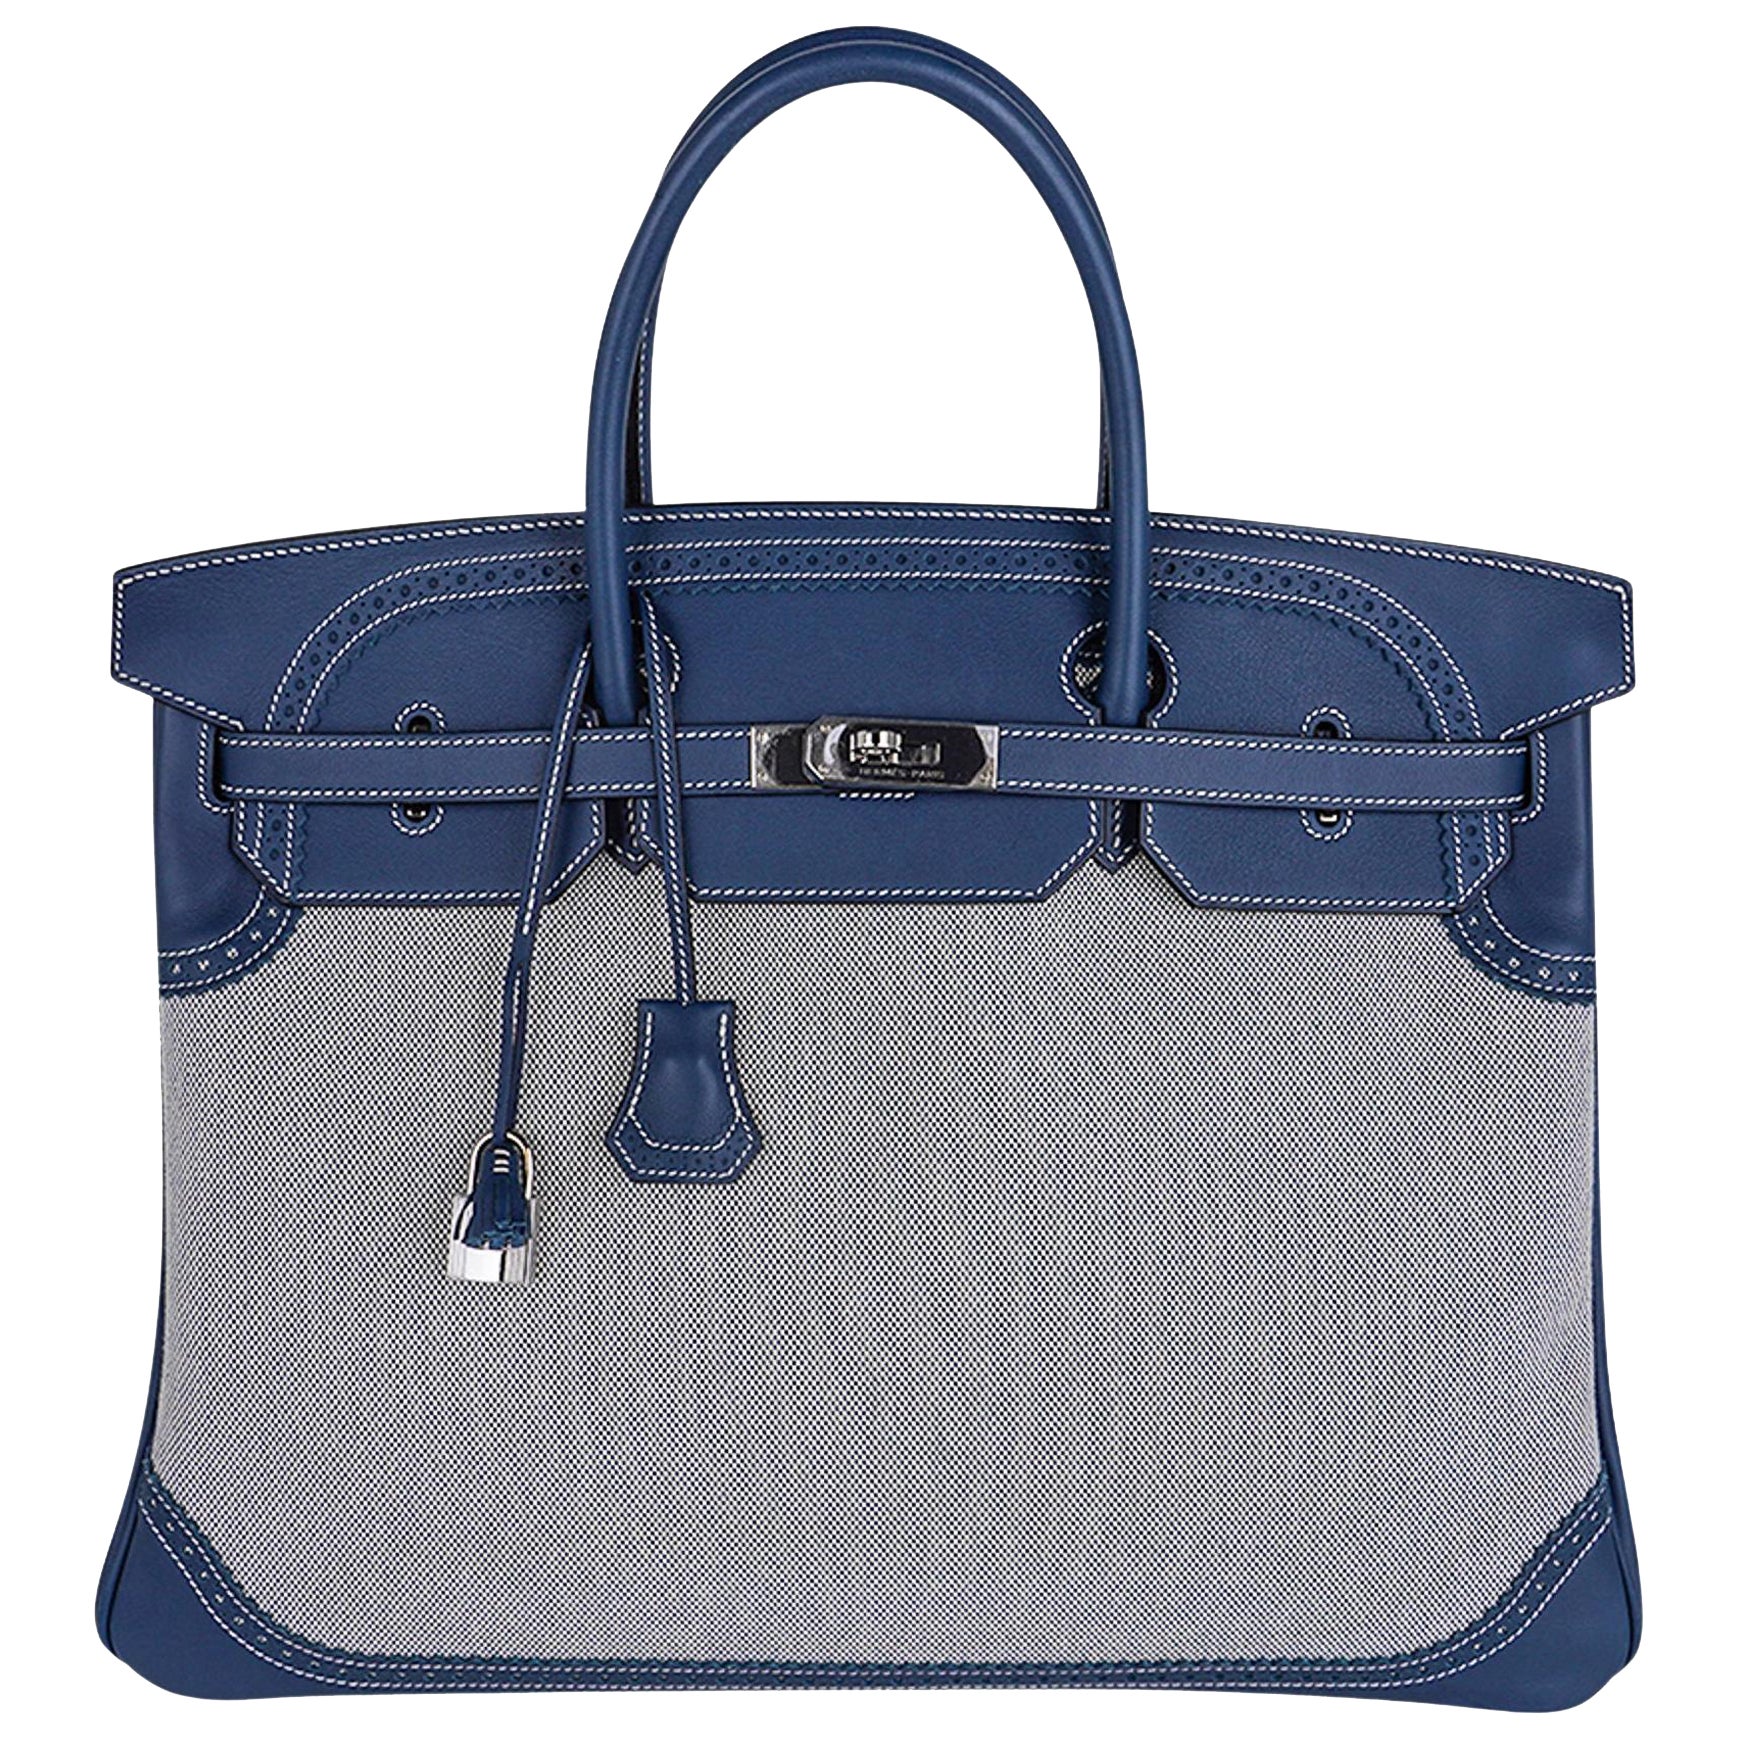 Hermes Birkin 40 Ghillies Blue de Prusse w/ Blue Toile Bag Limited Edition